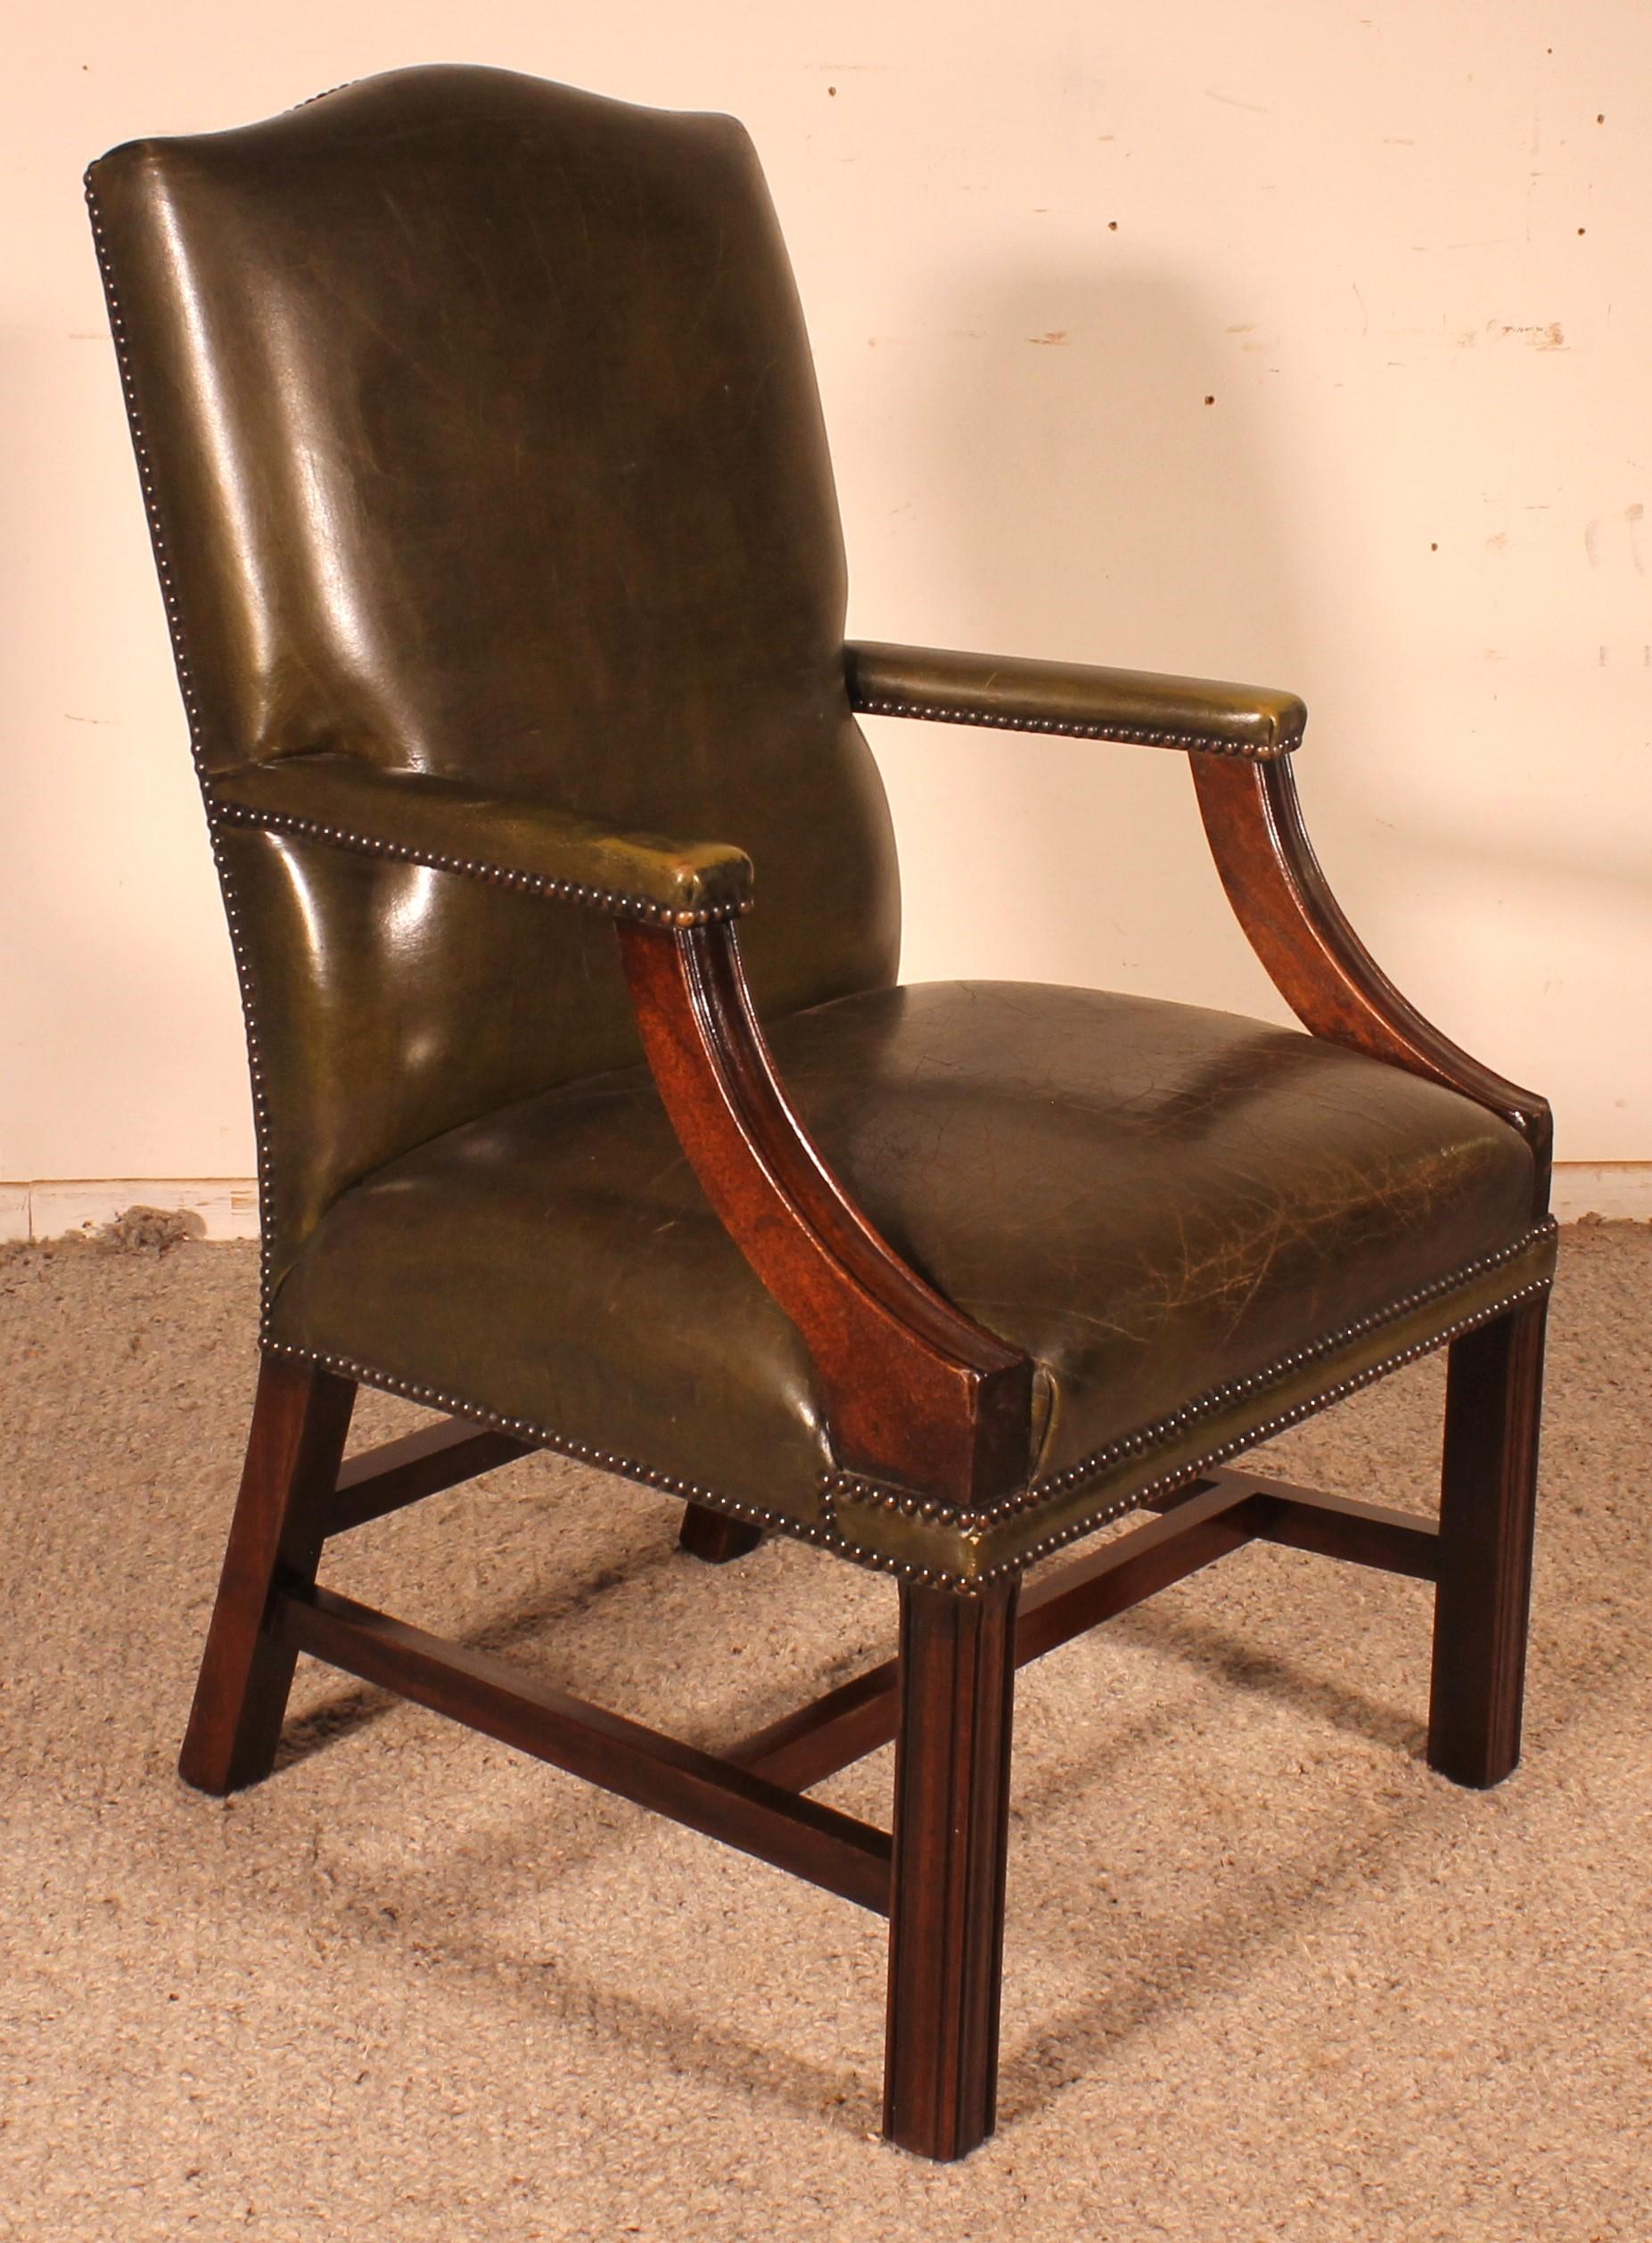 dark green leather chair